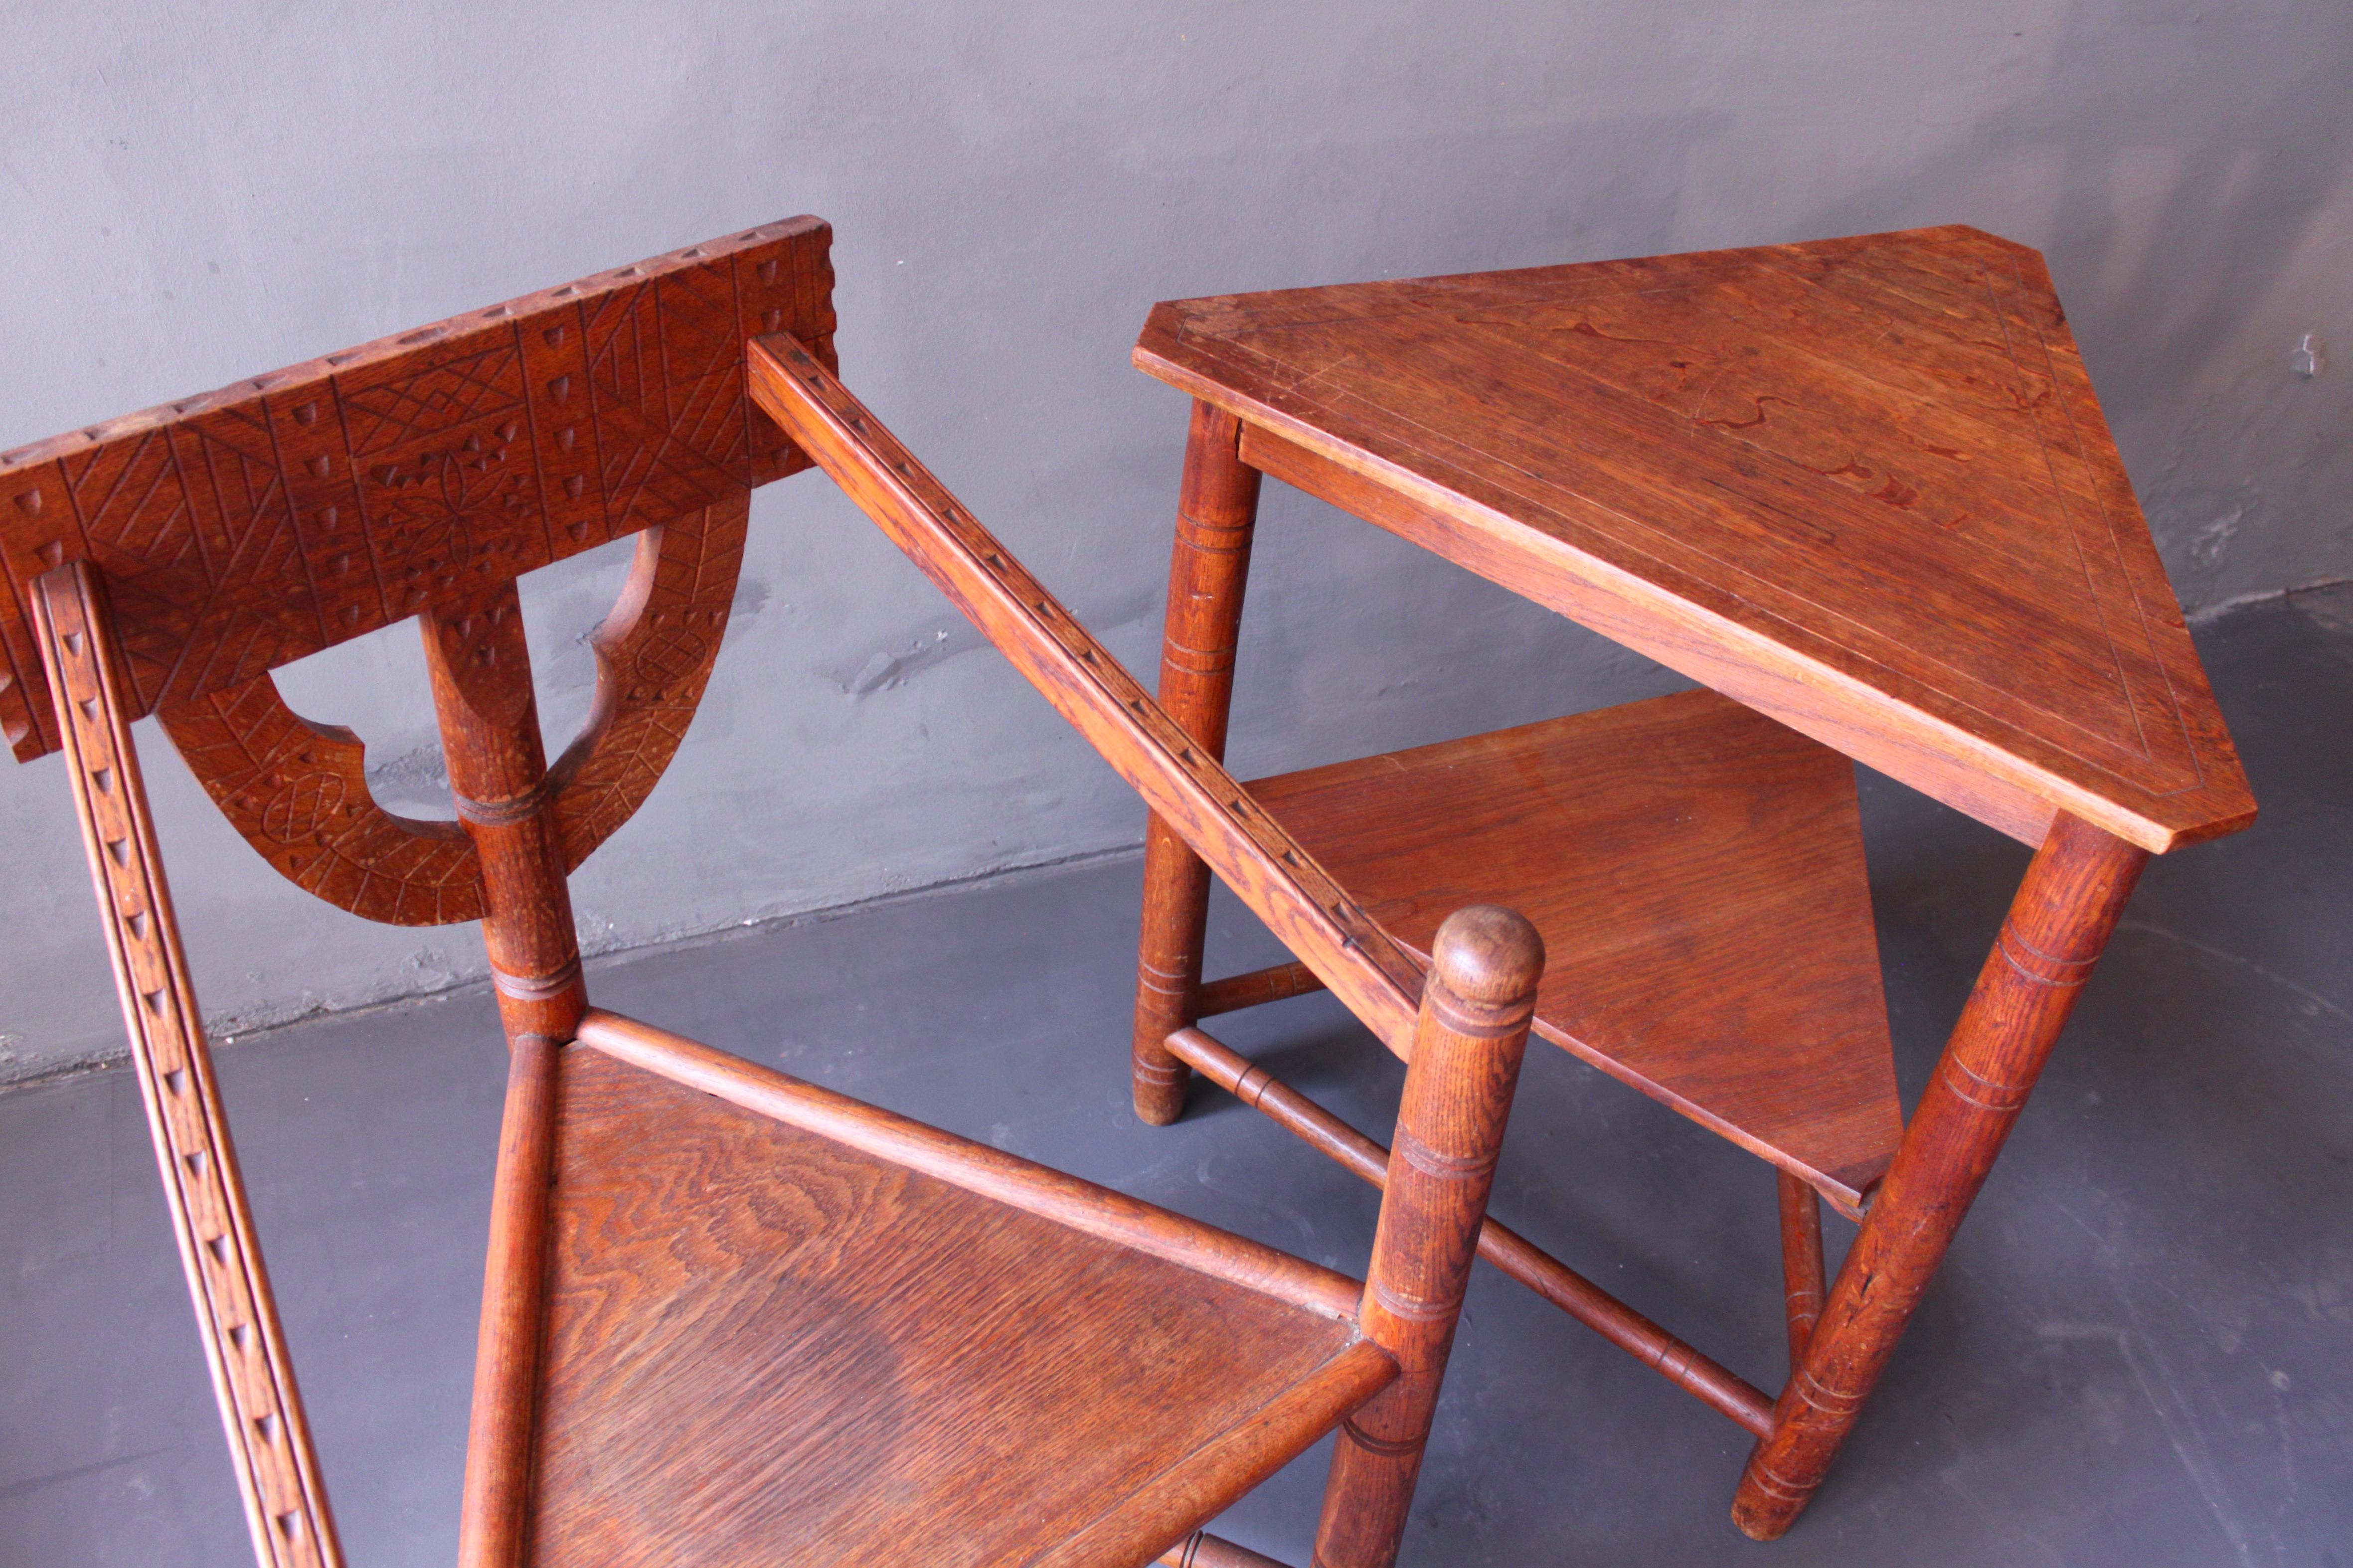 2 Chairs and Side Table by Bernhard Hoetger for Fischerhuder Werkstätten, 1915 For Sale 3